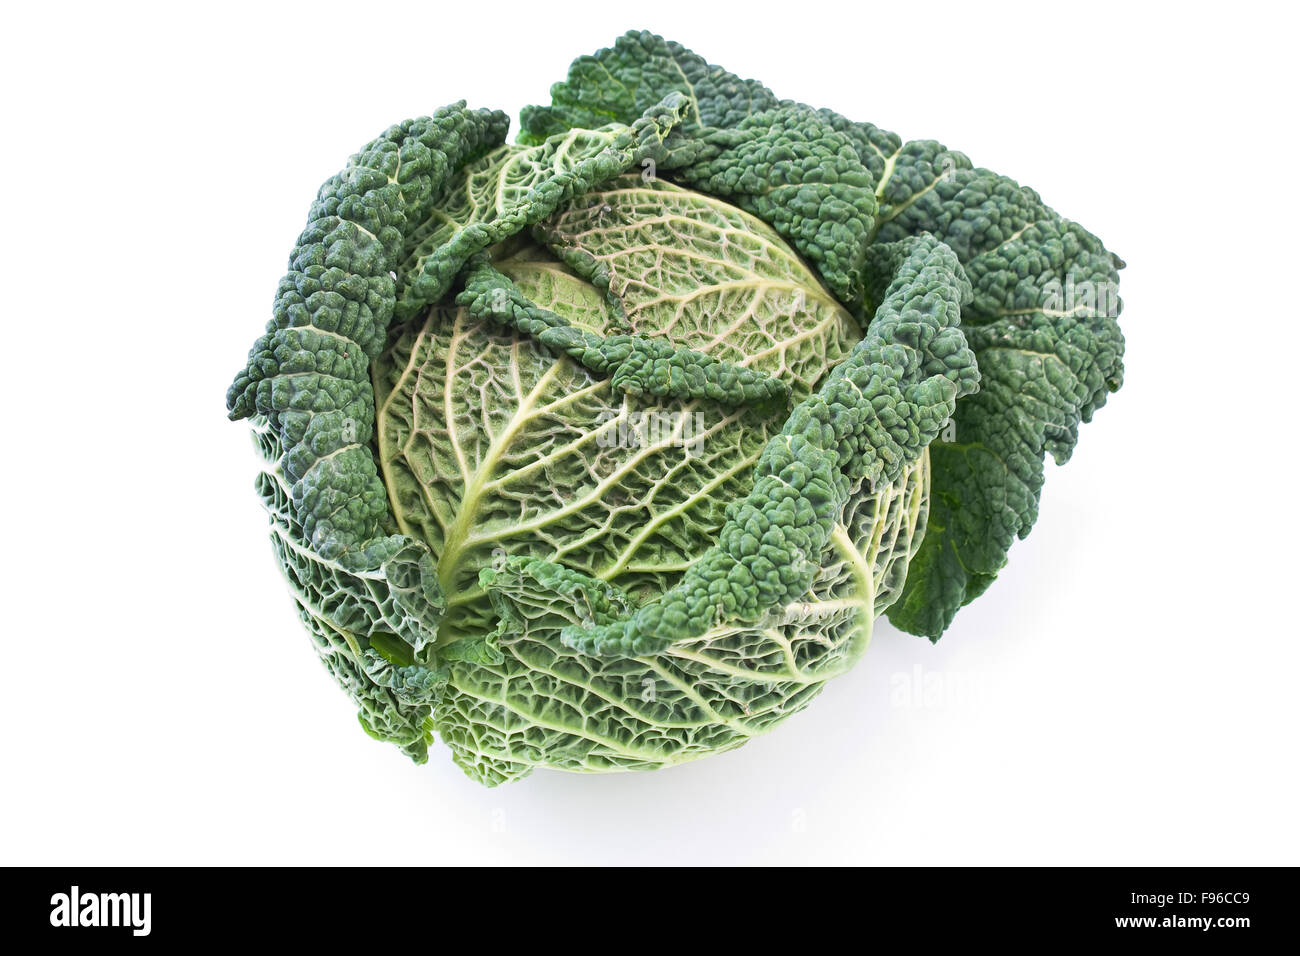 Kale vegetable isolated on white Stock Photo